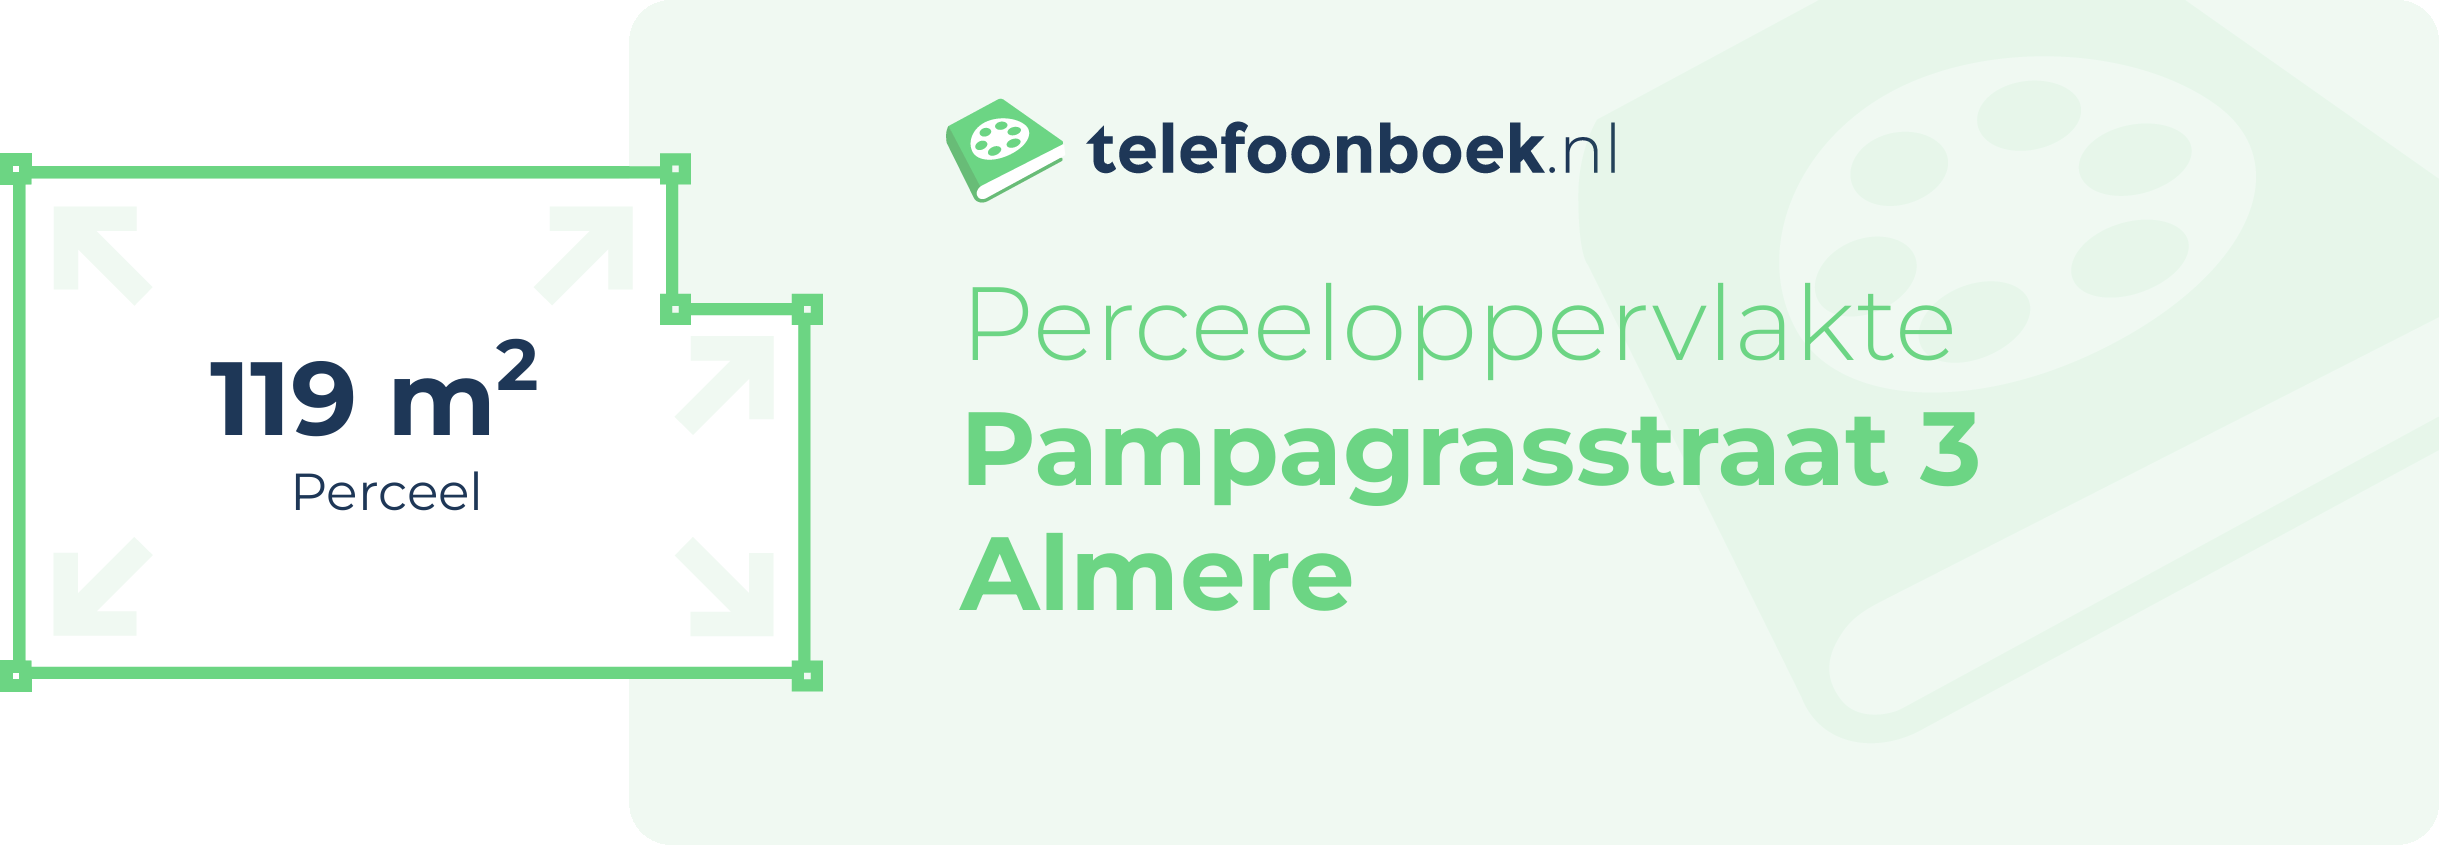 Perceeloppervlakte Pampagrasstraat 3 Almere